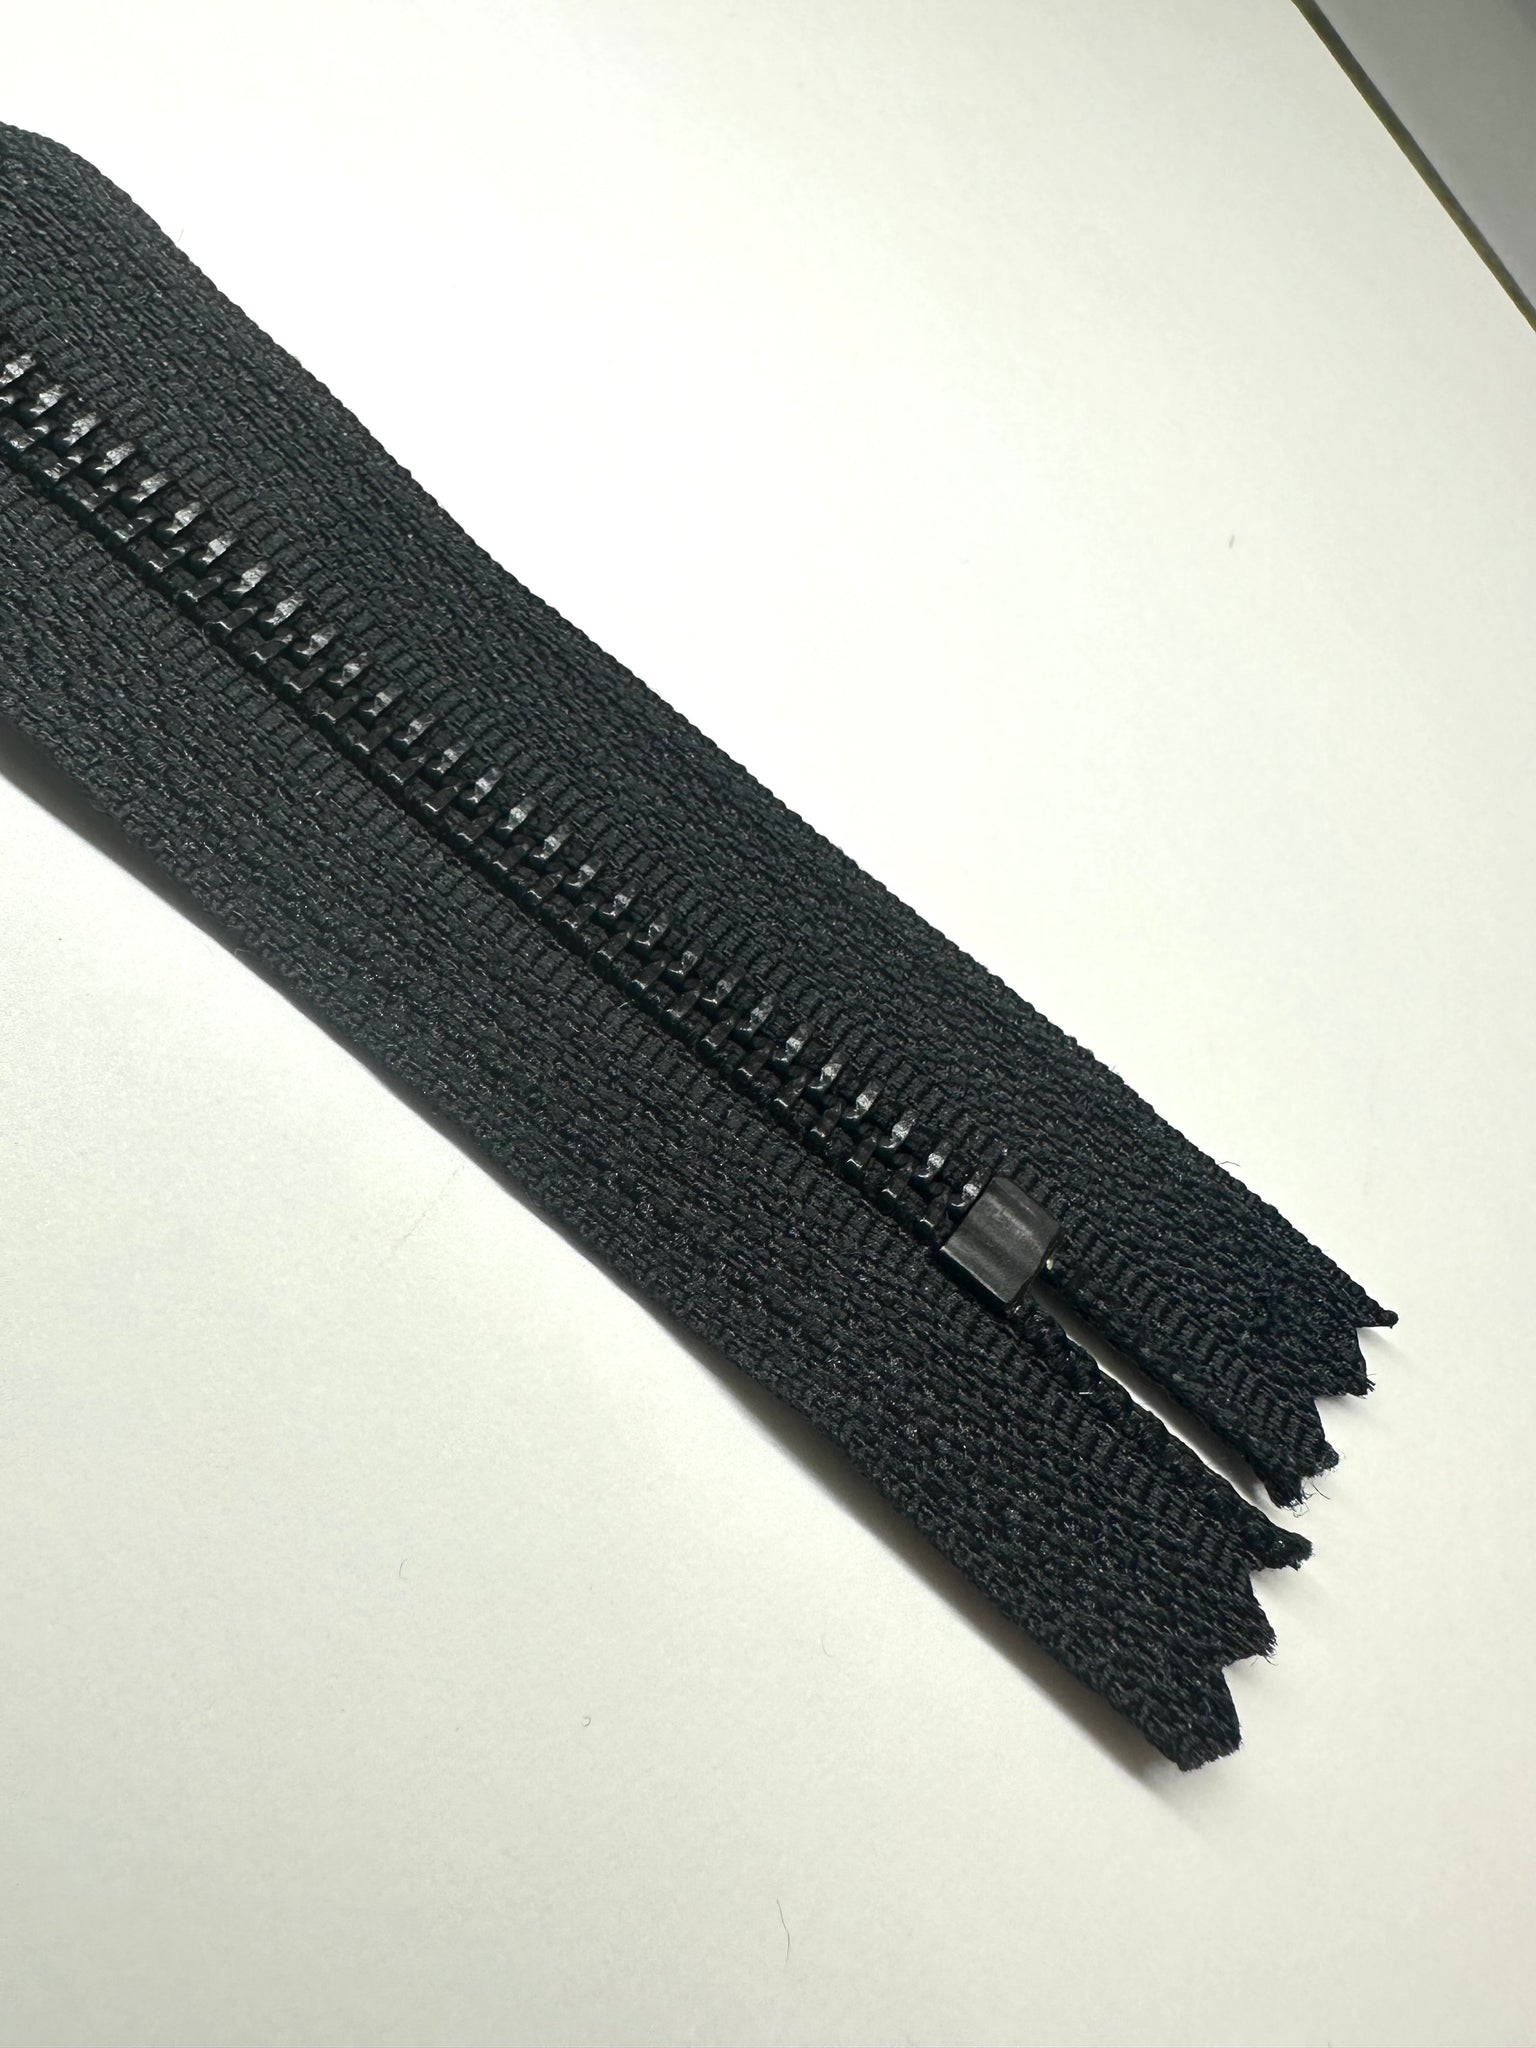 YKK #5 20 Molded Plastic Two-Way Jacket Zipper - Black (580)